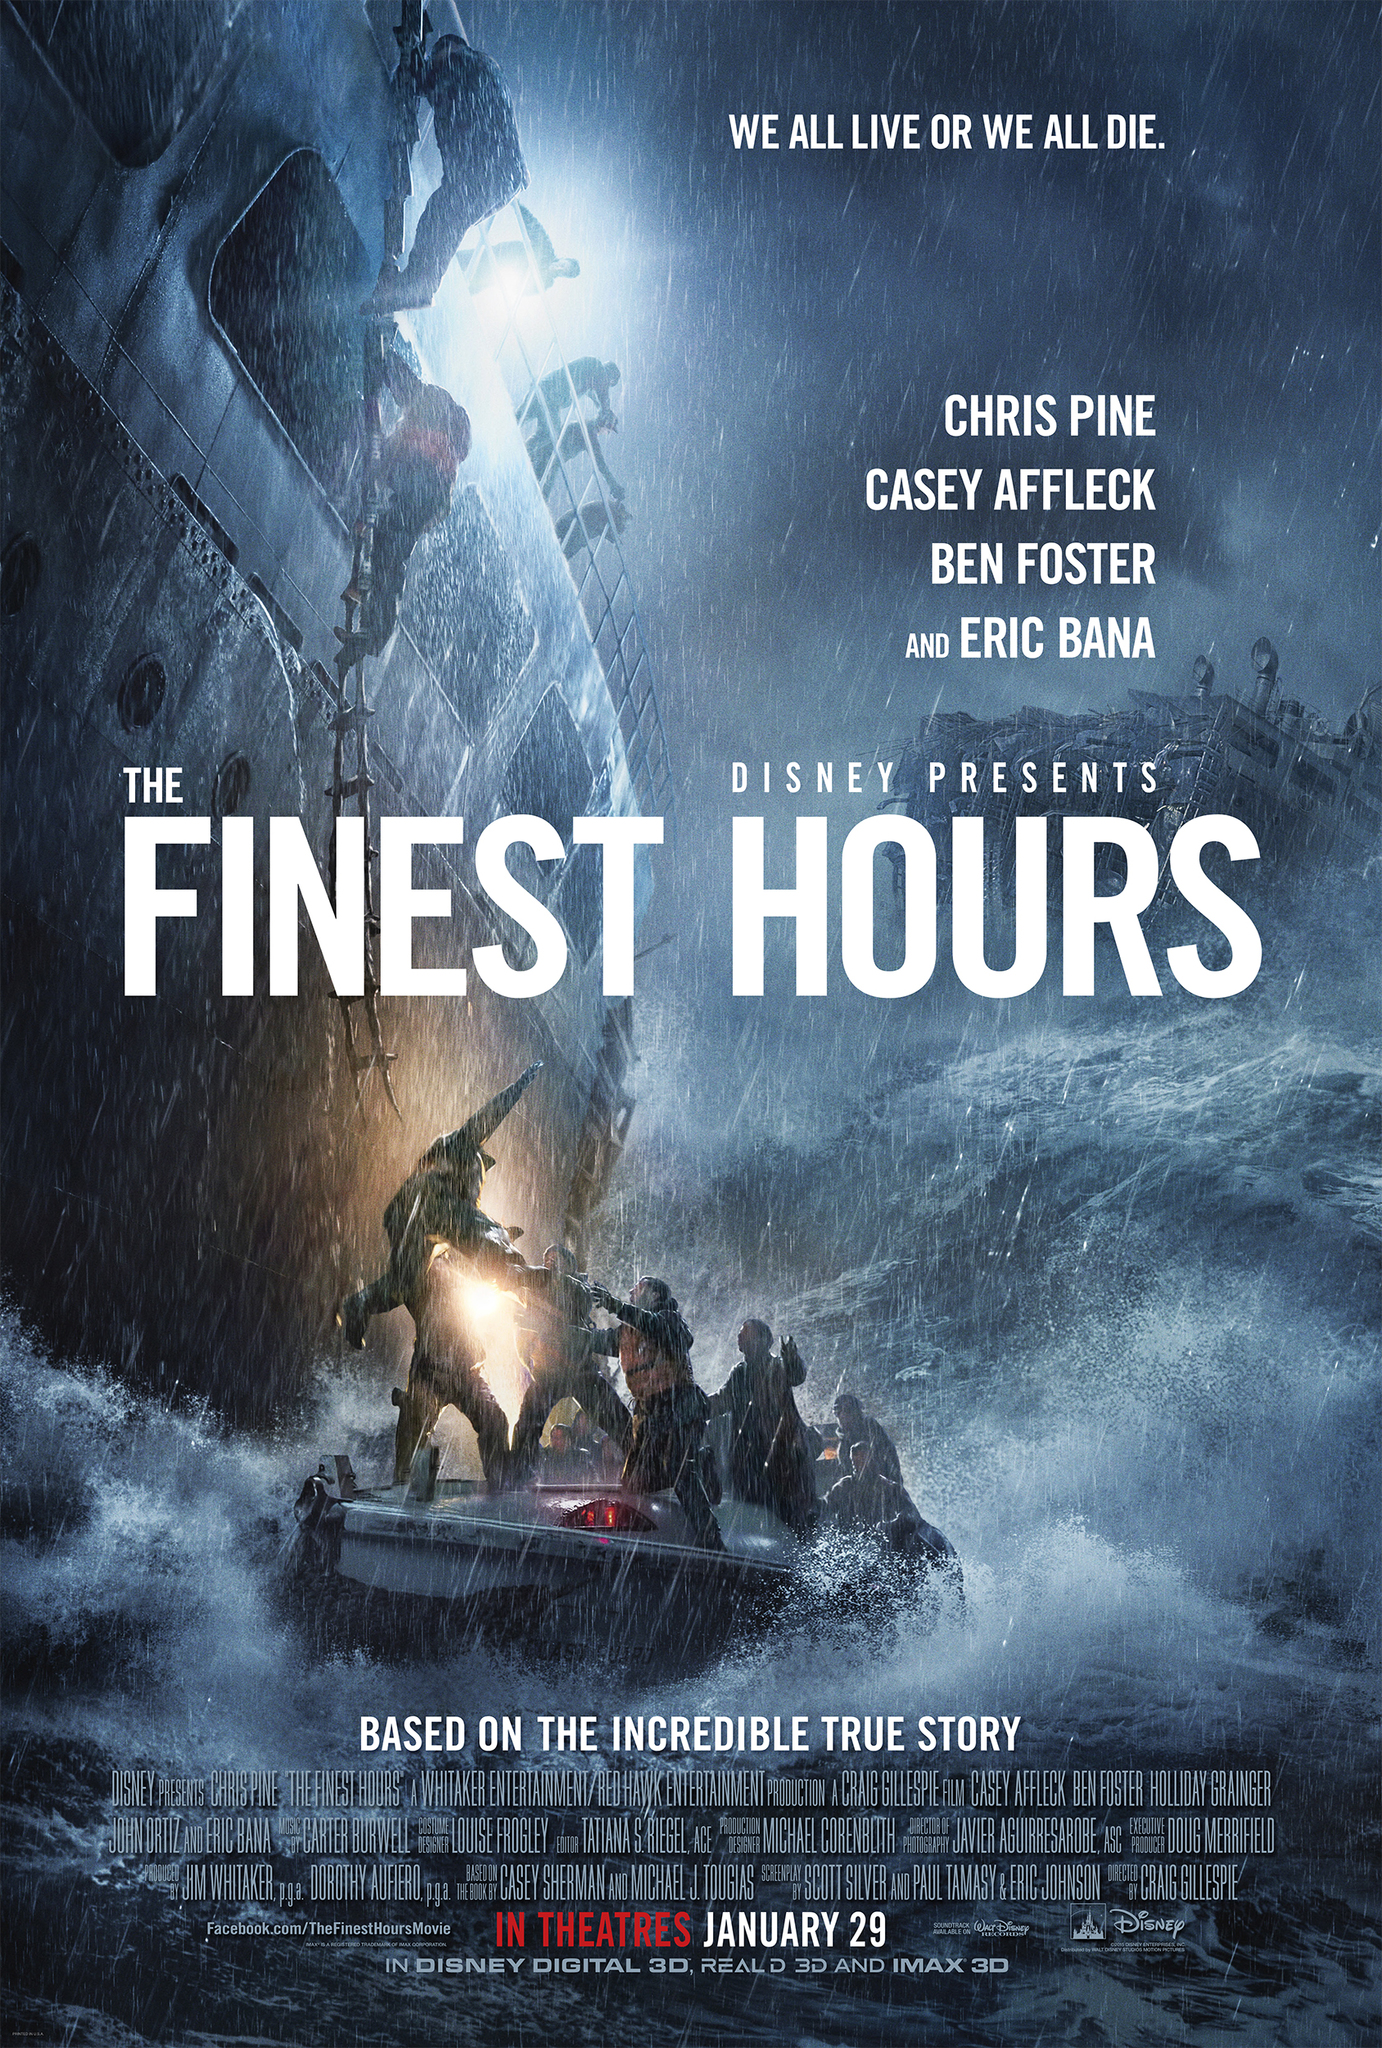 The Finest Hours (2016) ชั่วโมงระทึกฝ่าวิกฤตทะเลเดือด Chris Pine